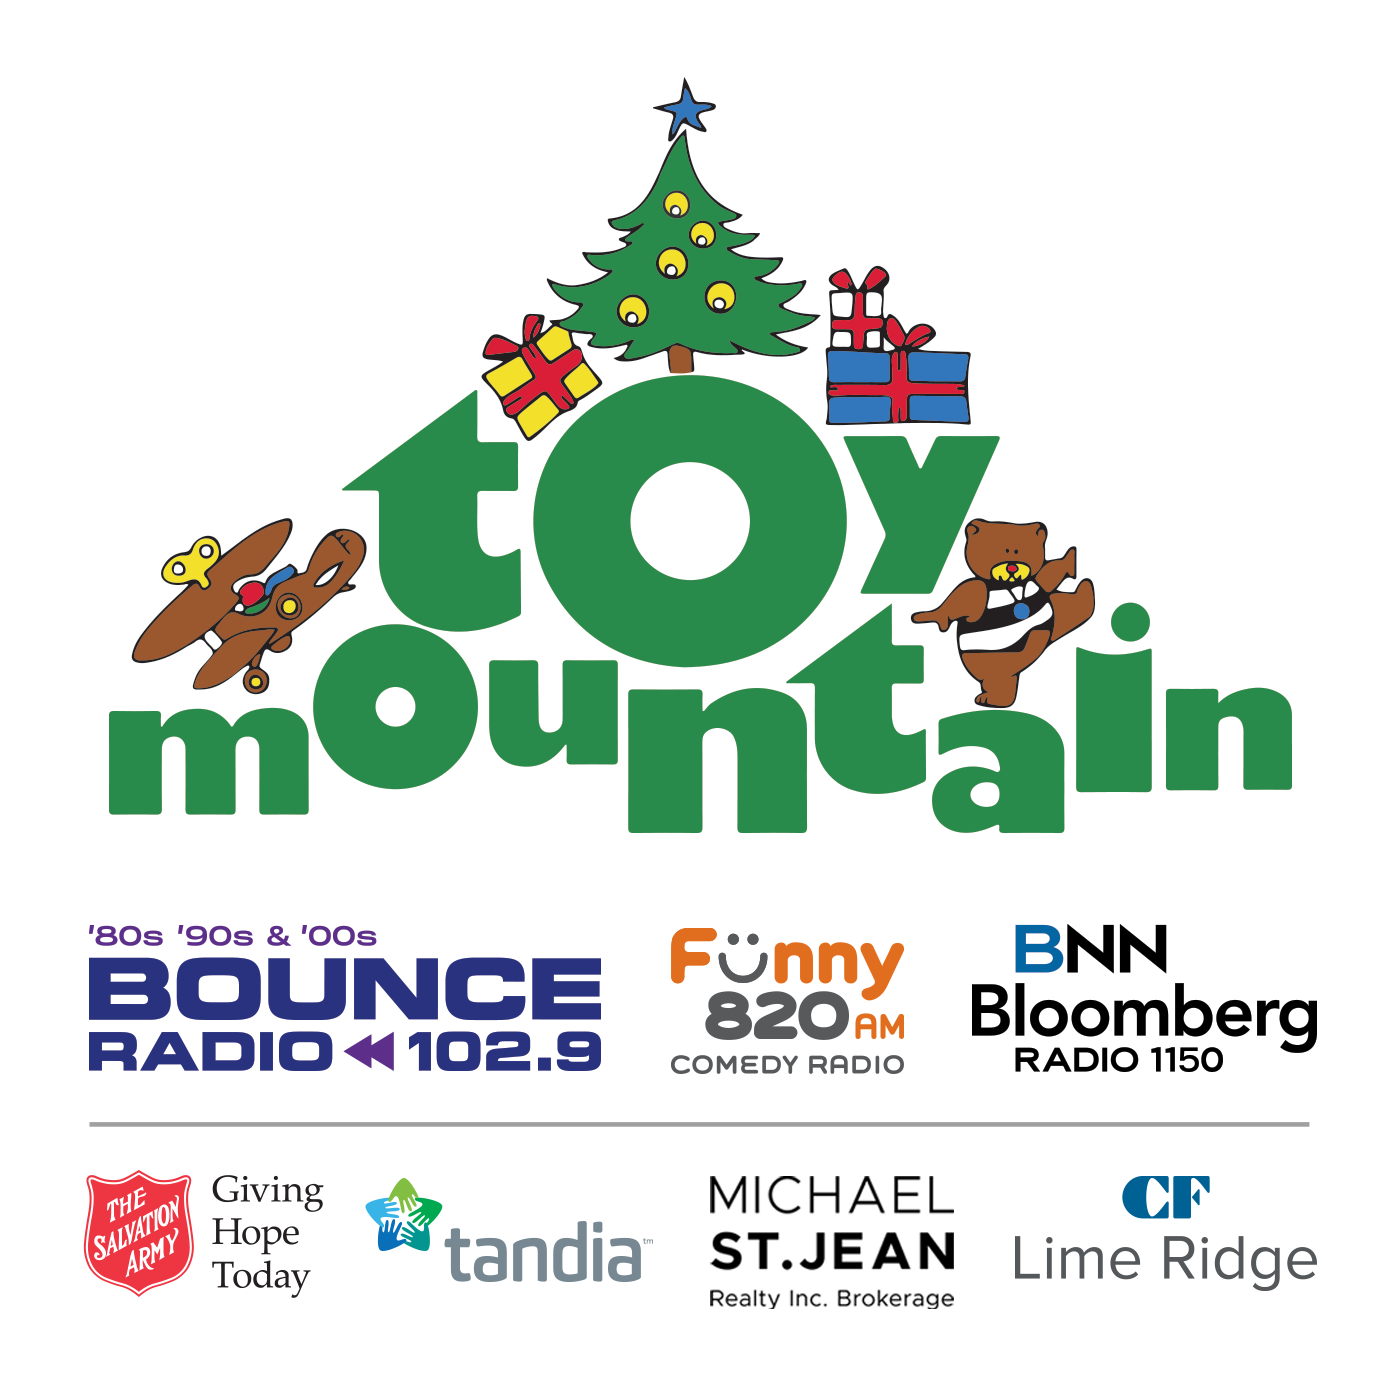 TOY MOUNTAIN - Andy Traynor - CF Lime Ridge